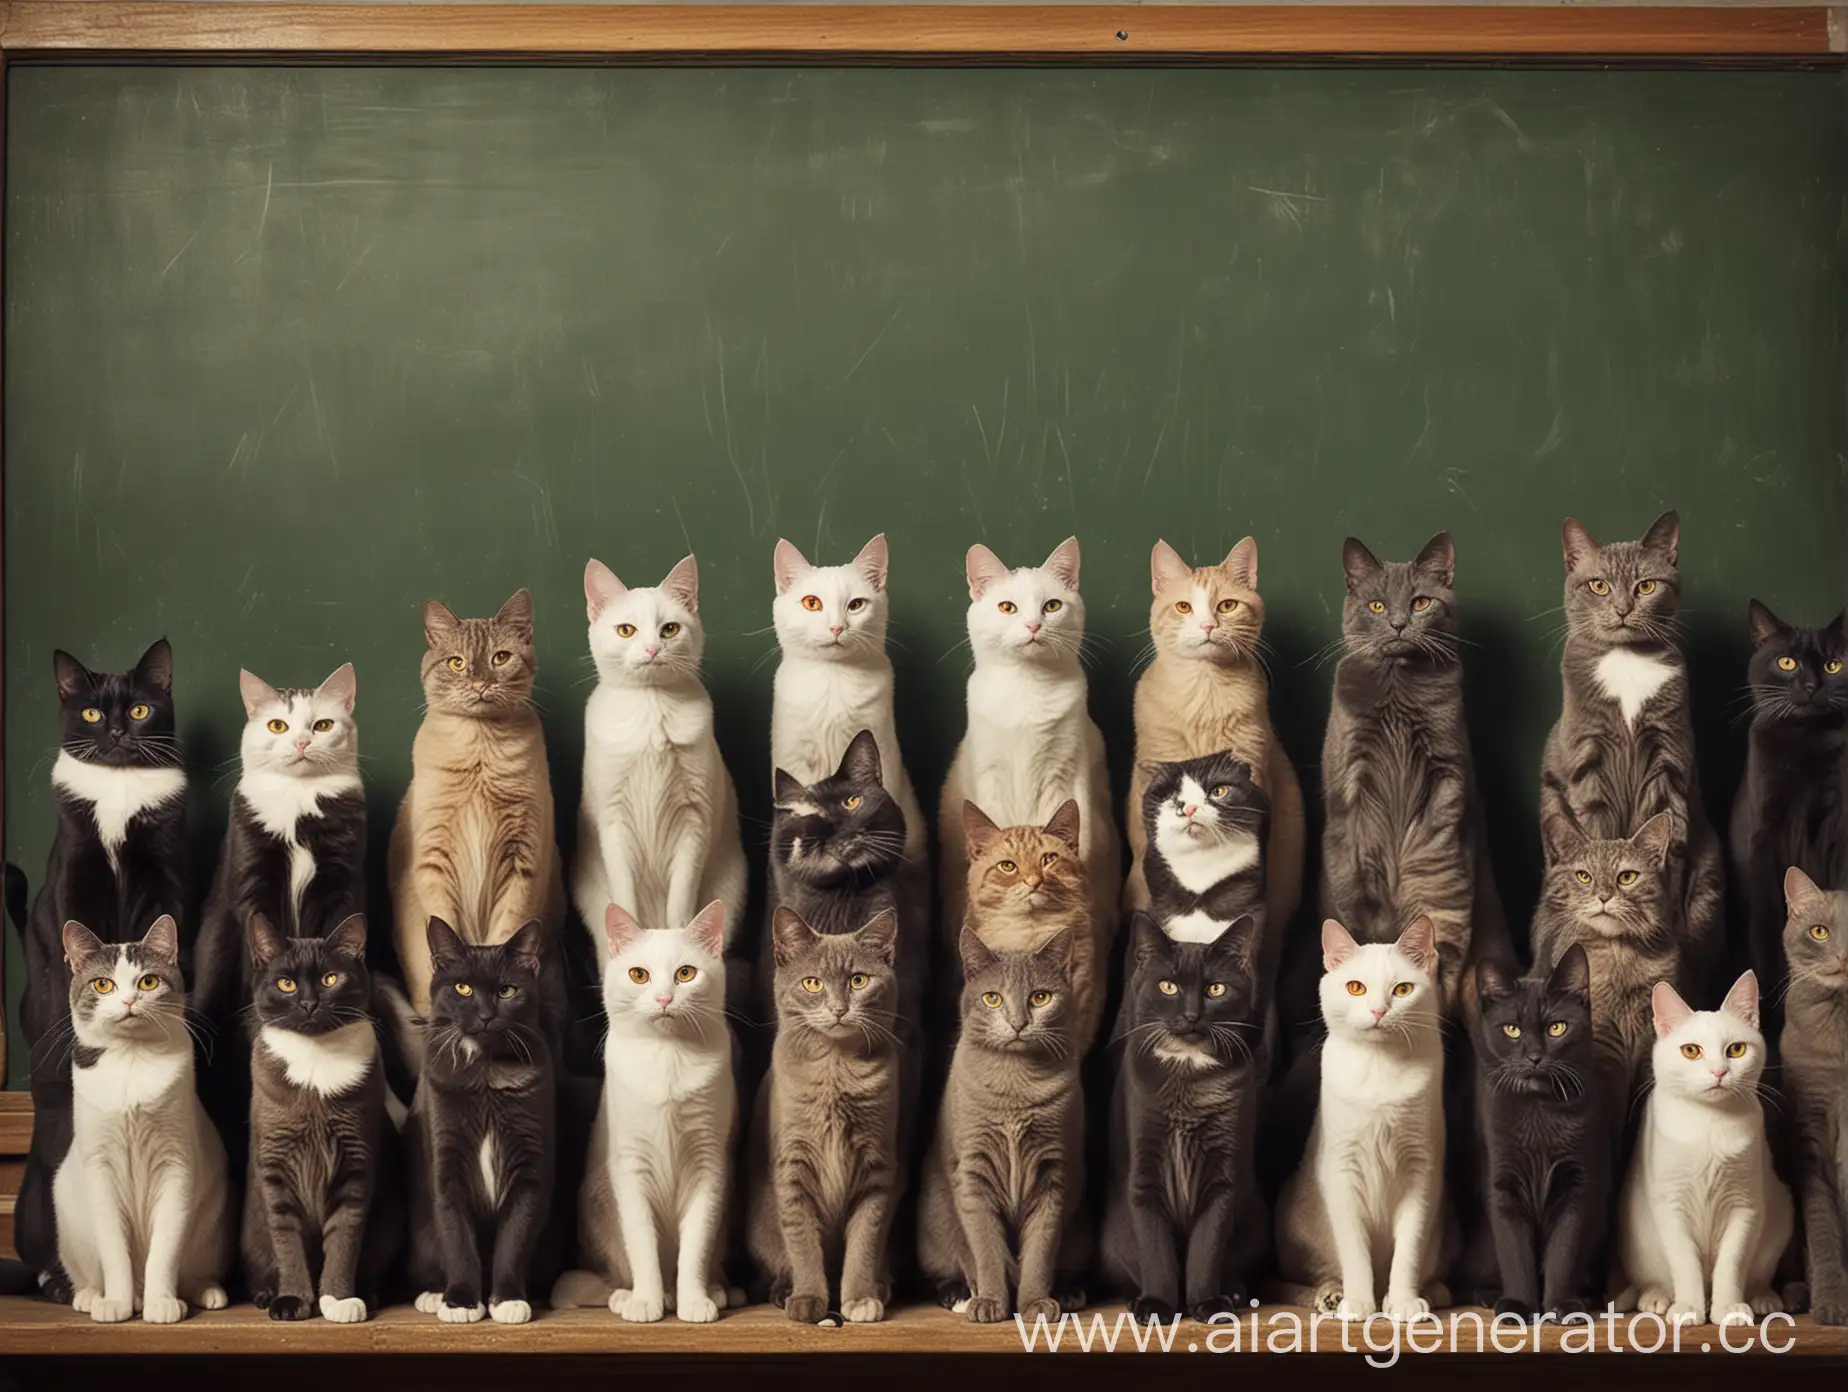 LoFi-Cats-Teacher-Eleven-Feline-Scholars-Studying-Independently-on-Classroom-Chalkboard